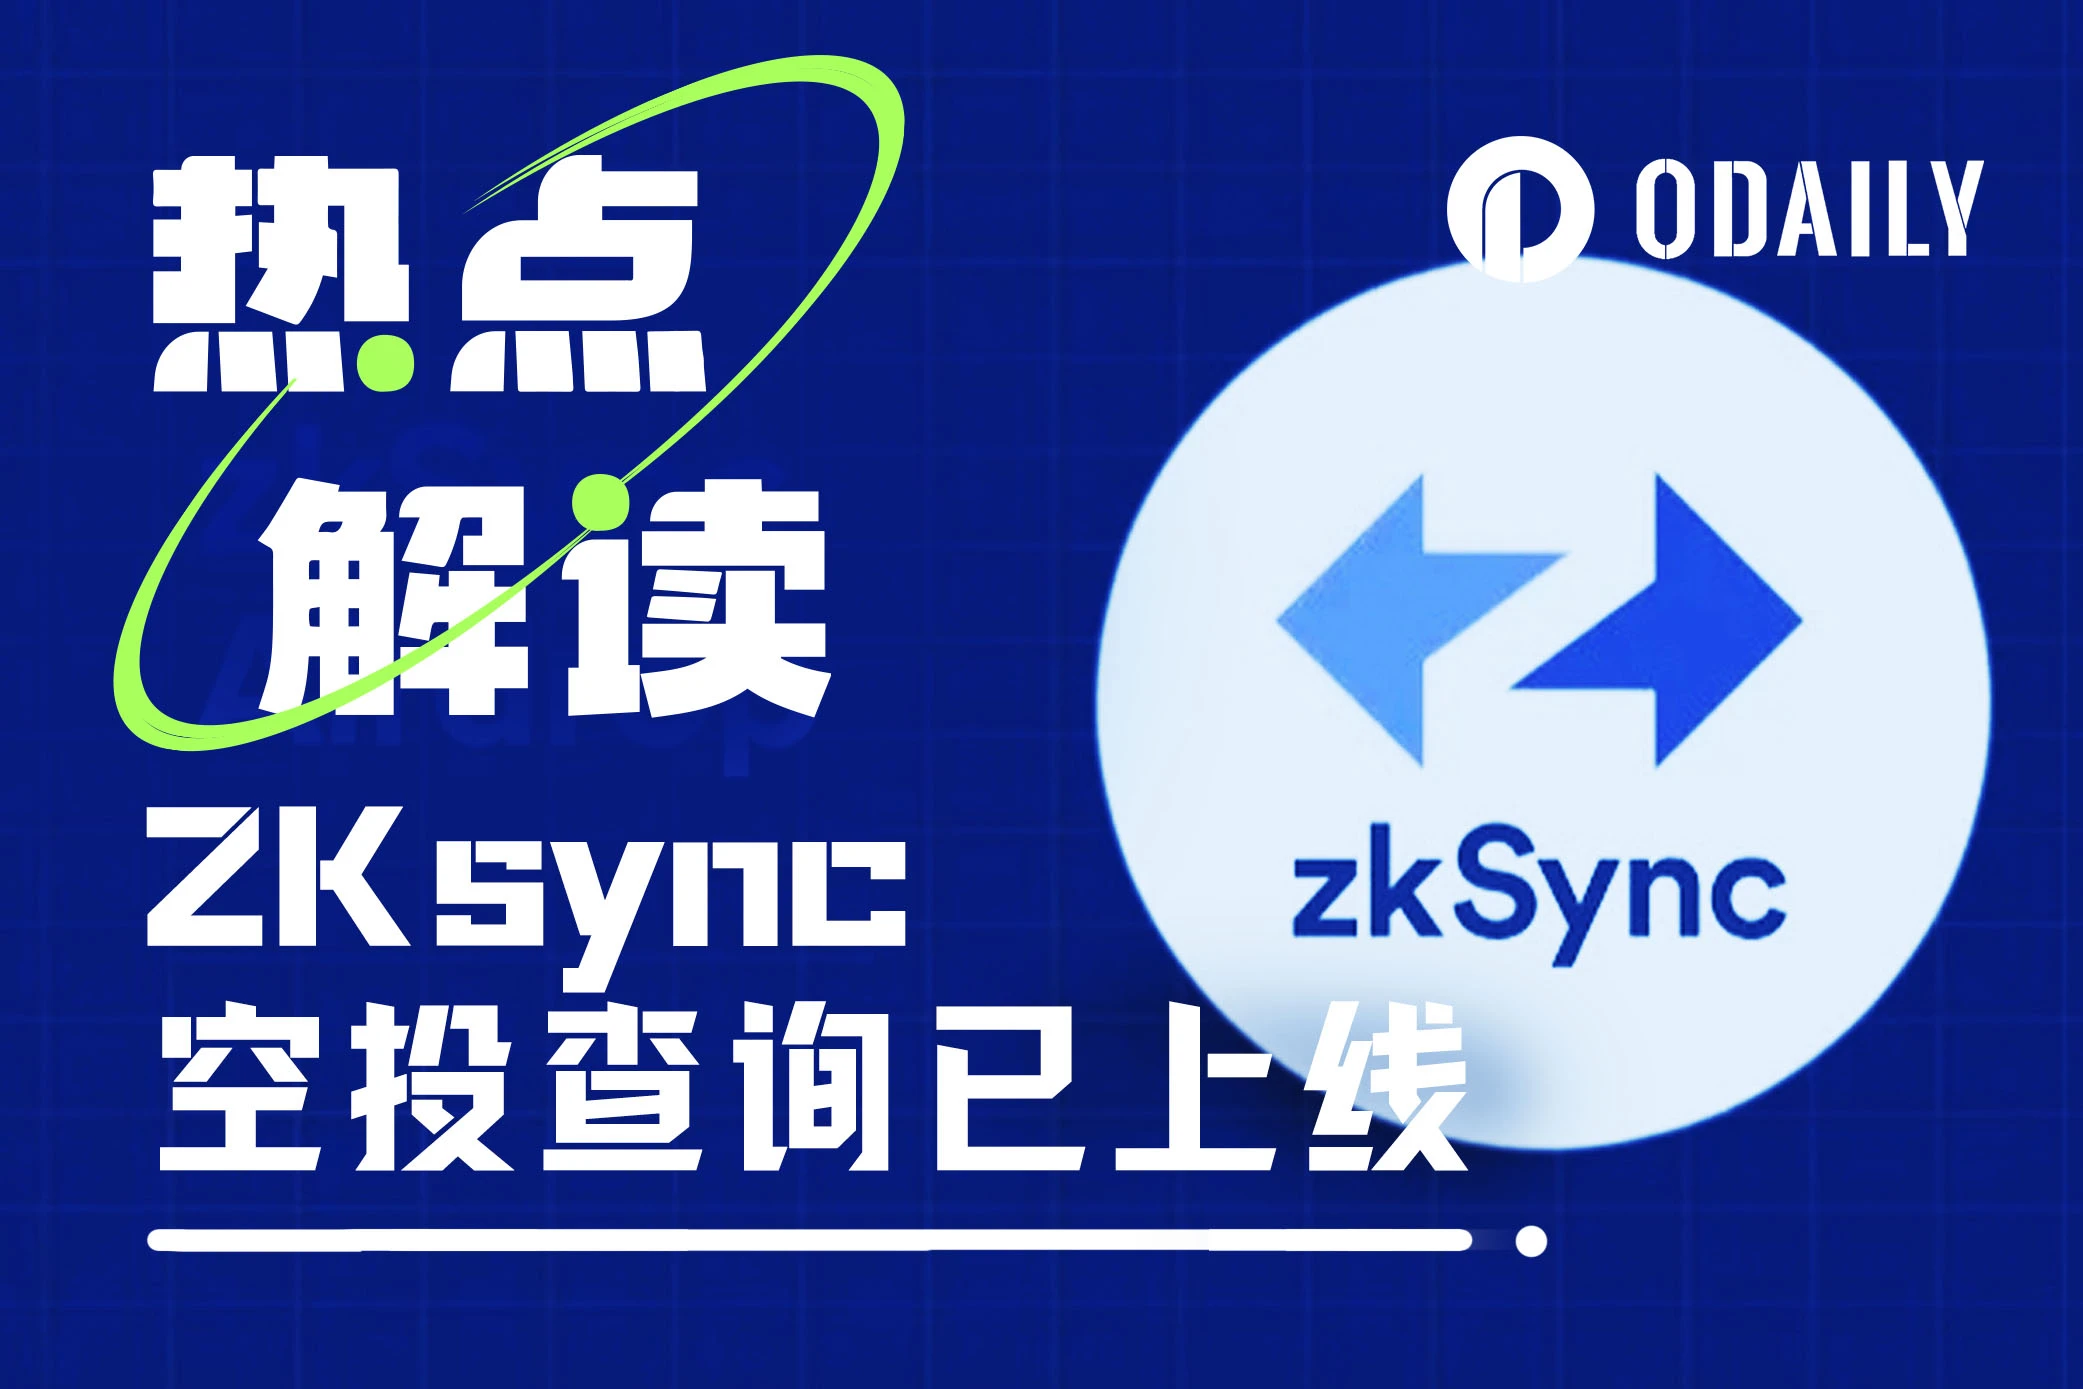 zkSync はエアドロップ調査を開始しますが、次のステップは何ですか?